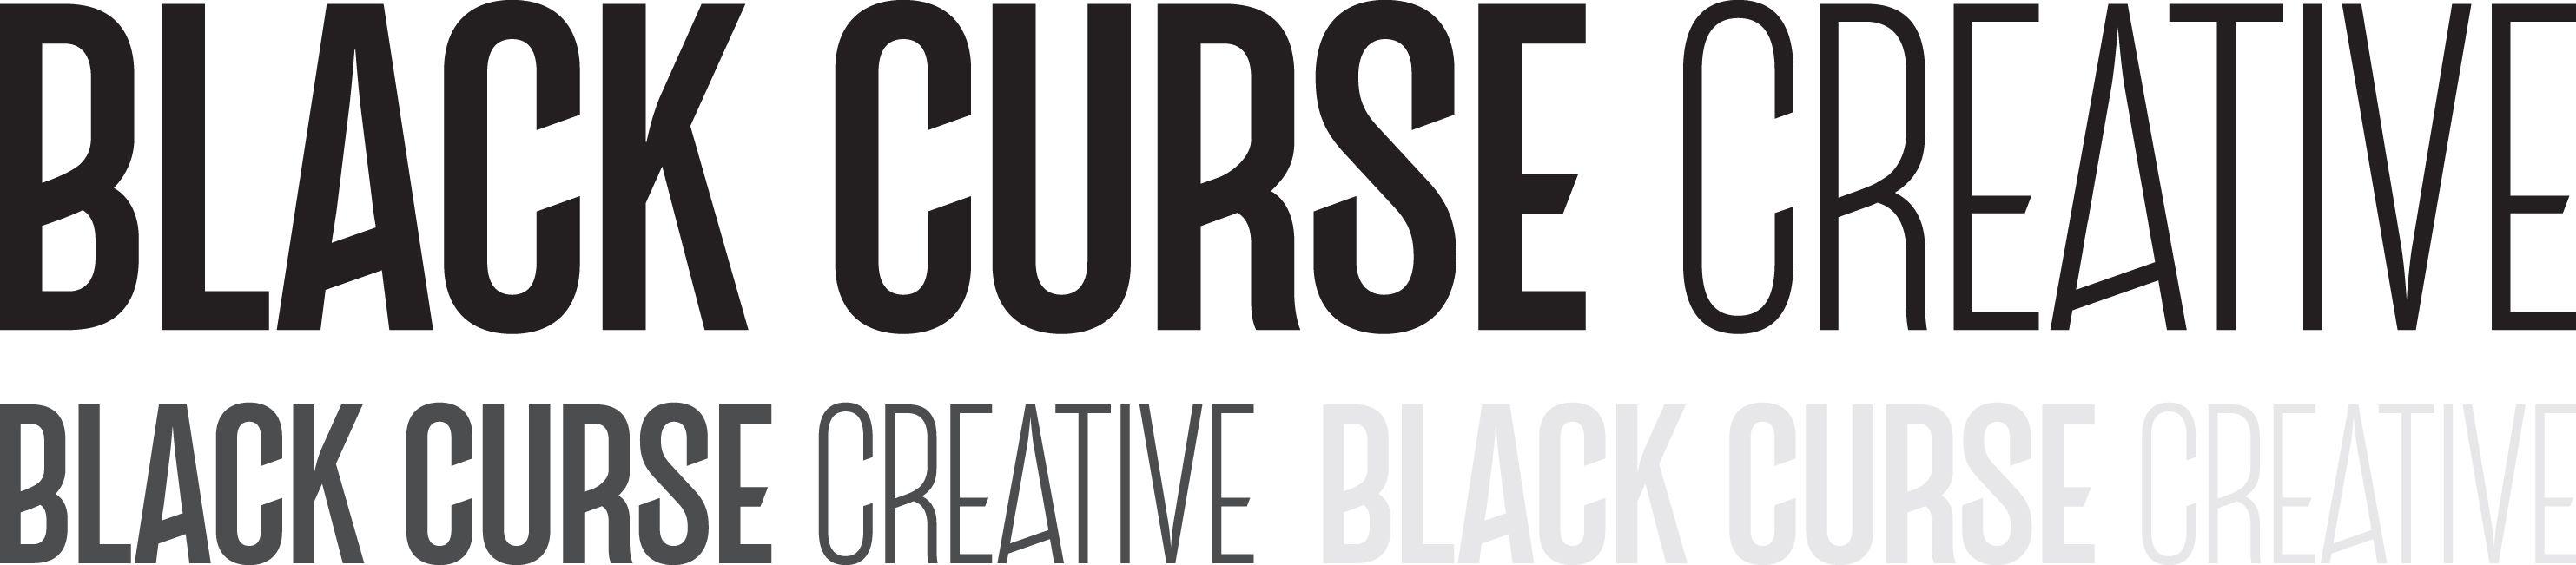 Black Word Logo - Black Curse Creative Rebranding